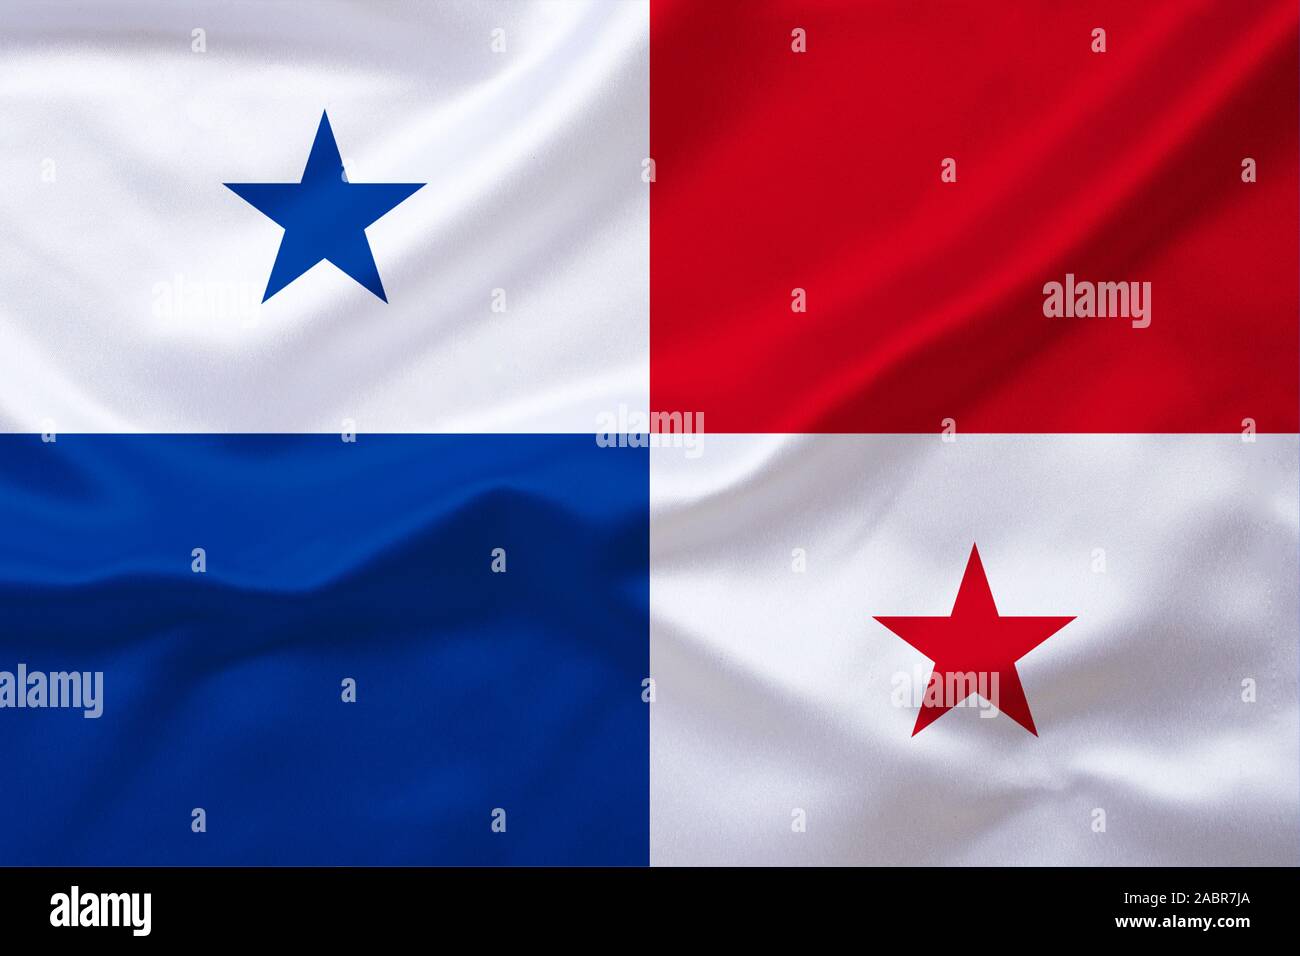 Flagge von Panama, Lateinamerika, Stock Photo